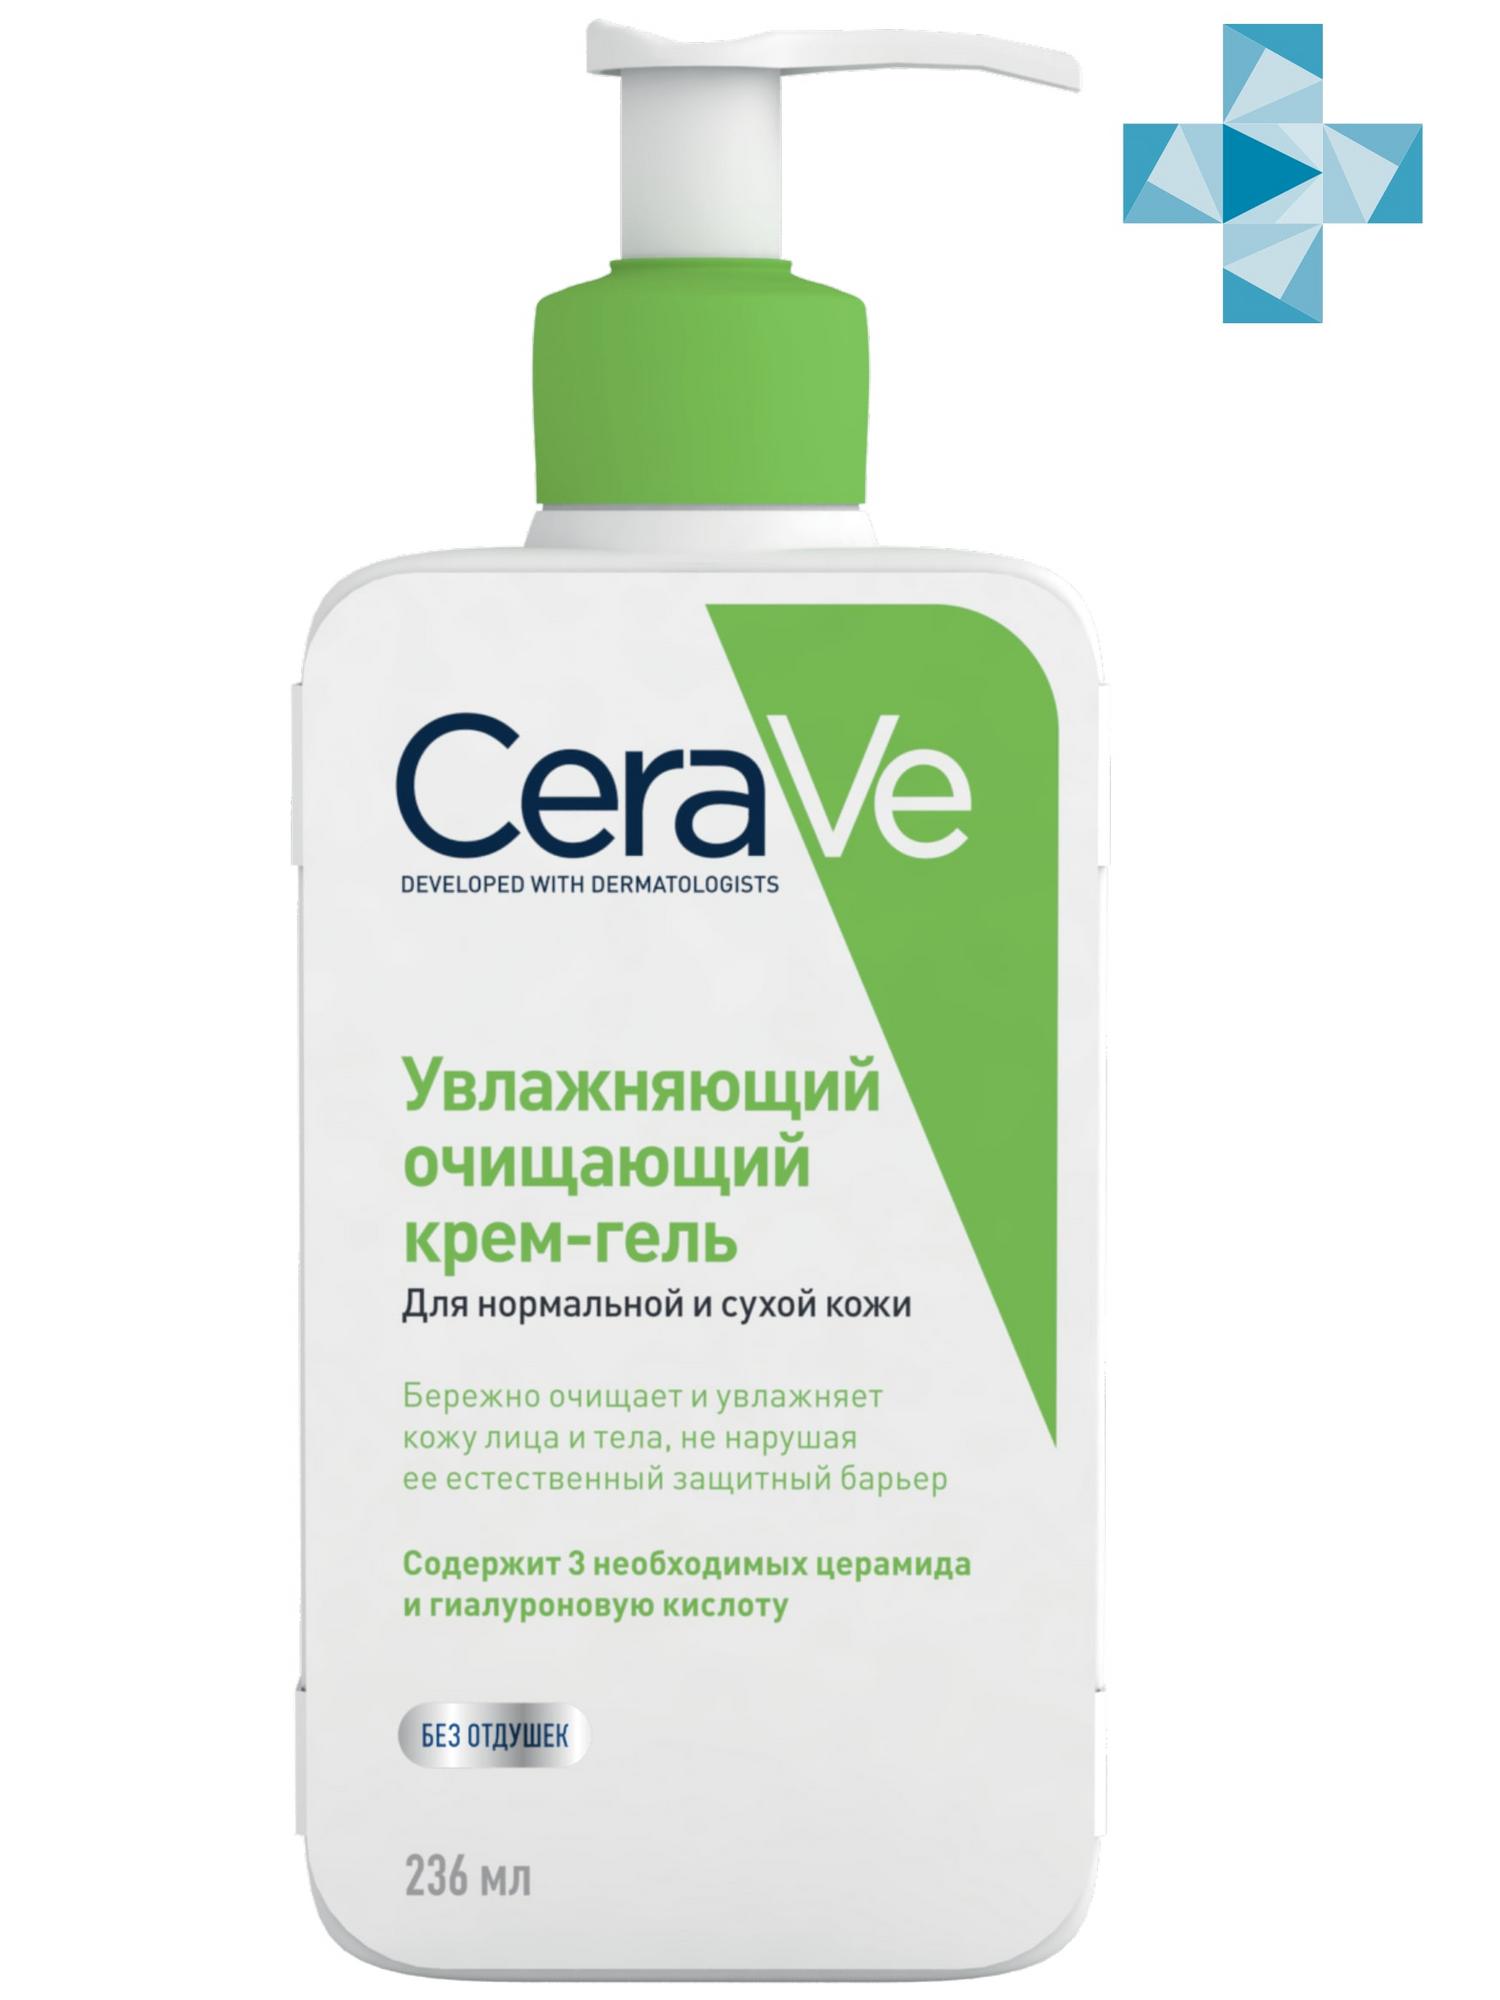 CeraVe Увлажняющий очищающий крем-гель с церамидами для норм